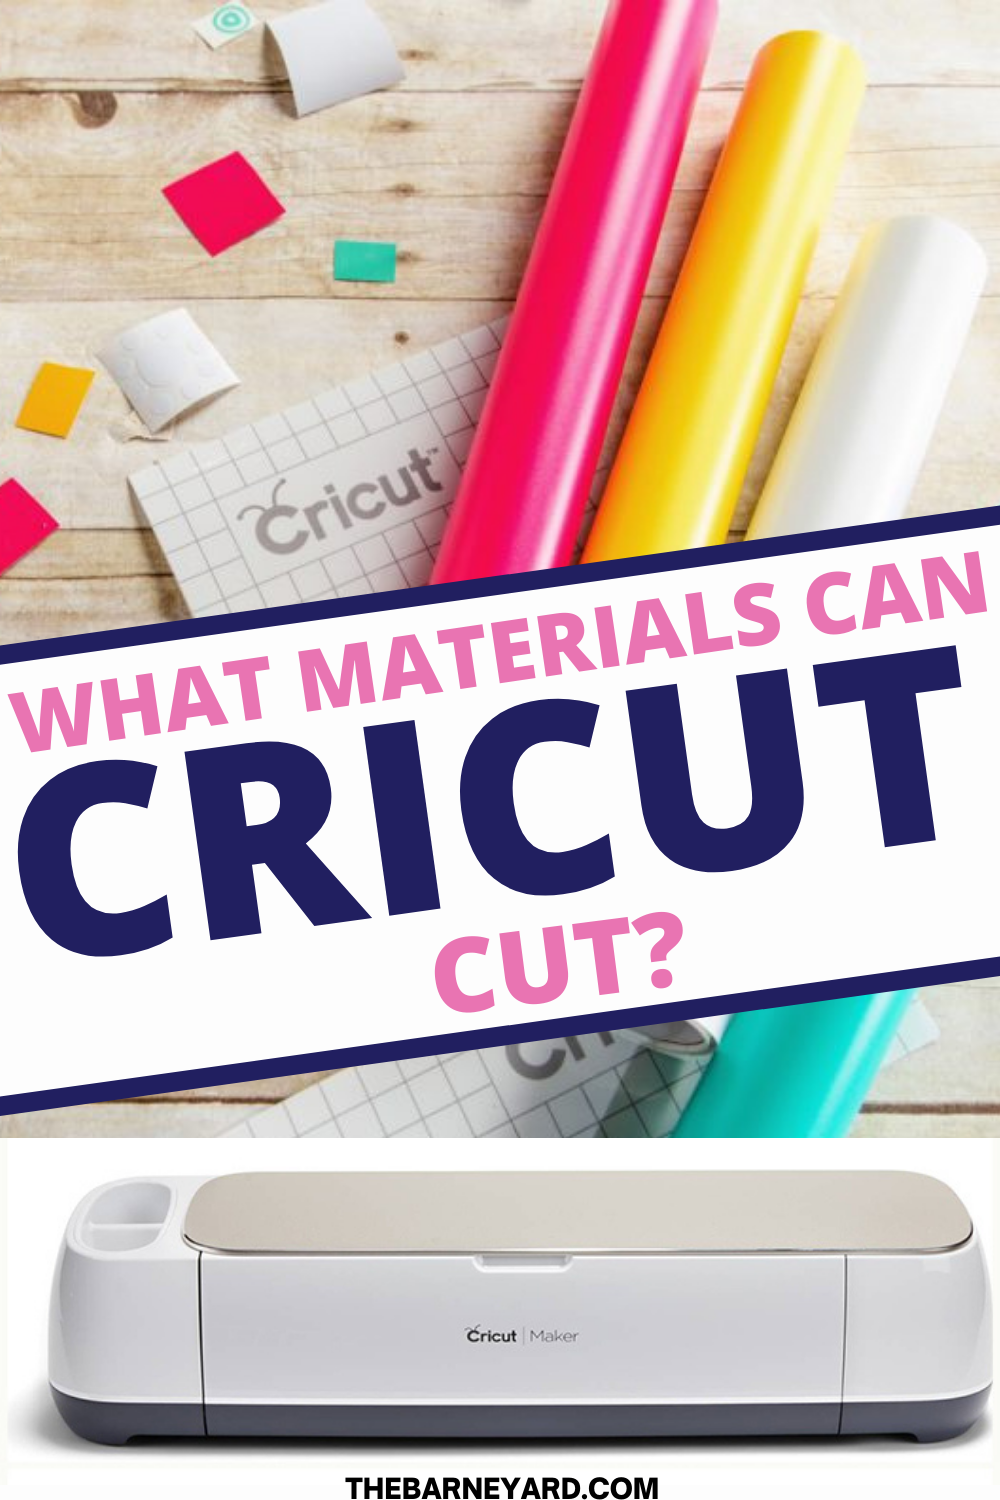 Can the Cricut Maker Cut Acrylic?